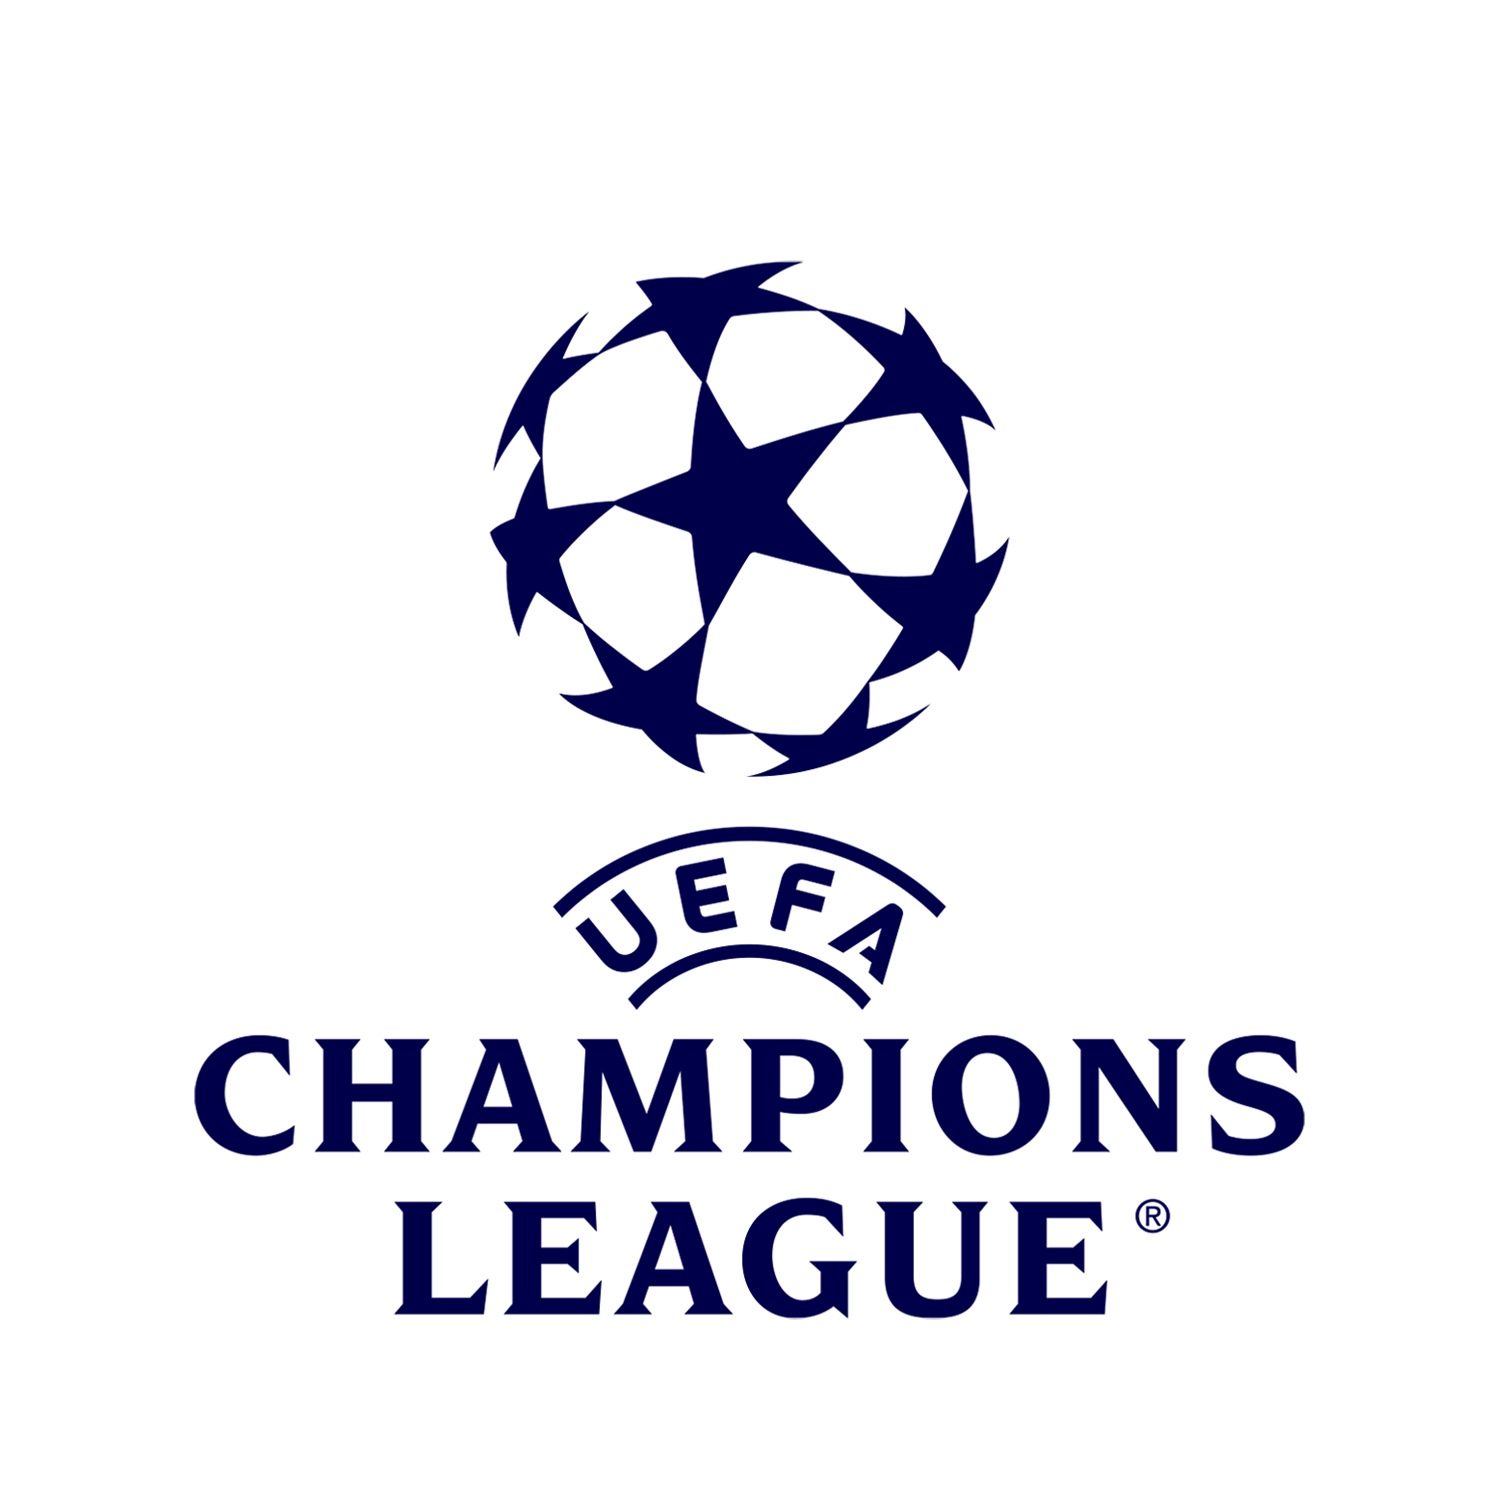 UEFA Champions League Drinkware